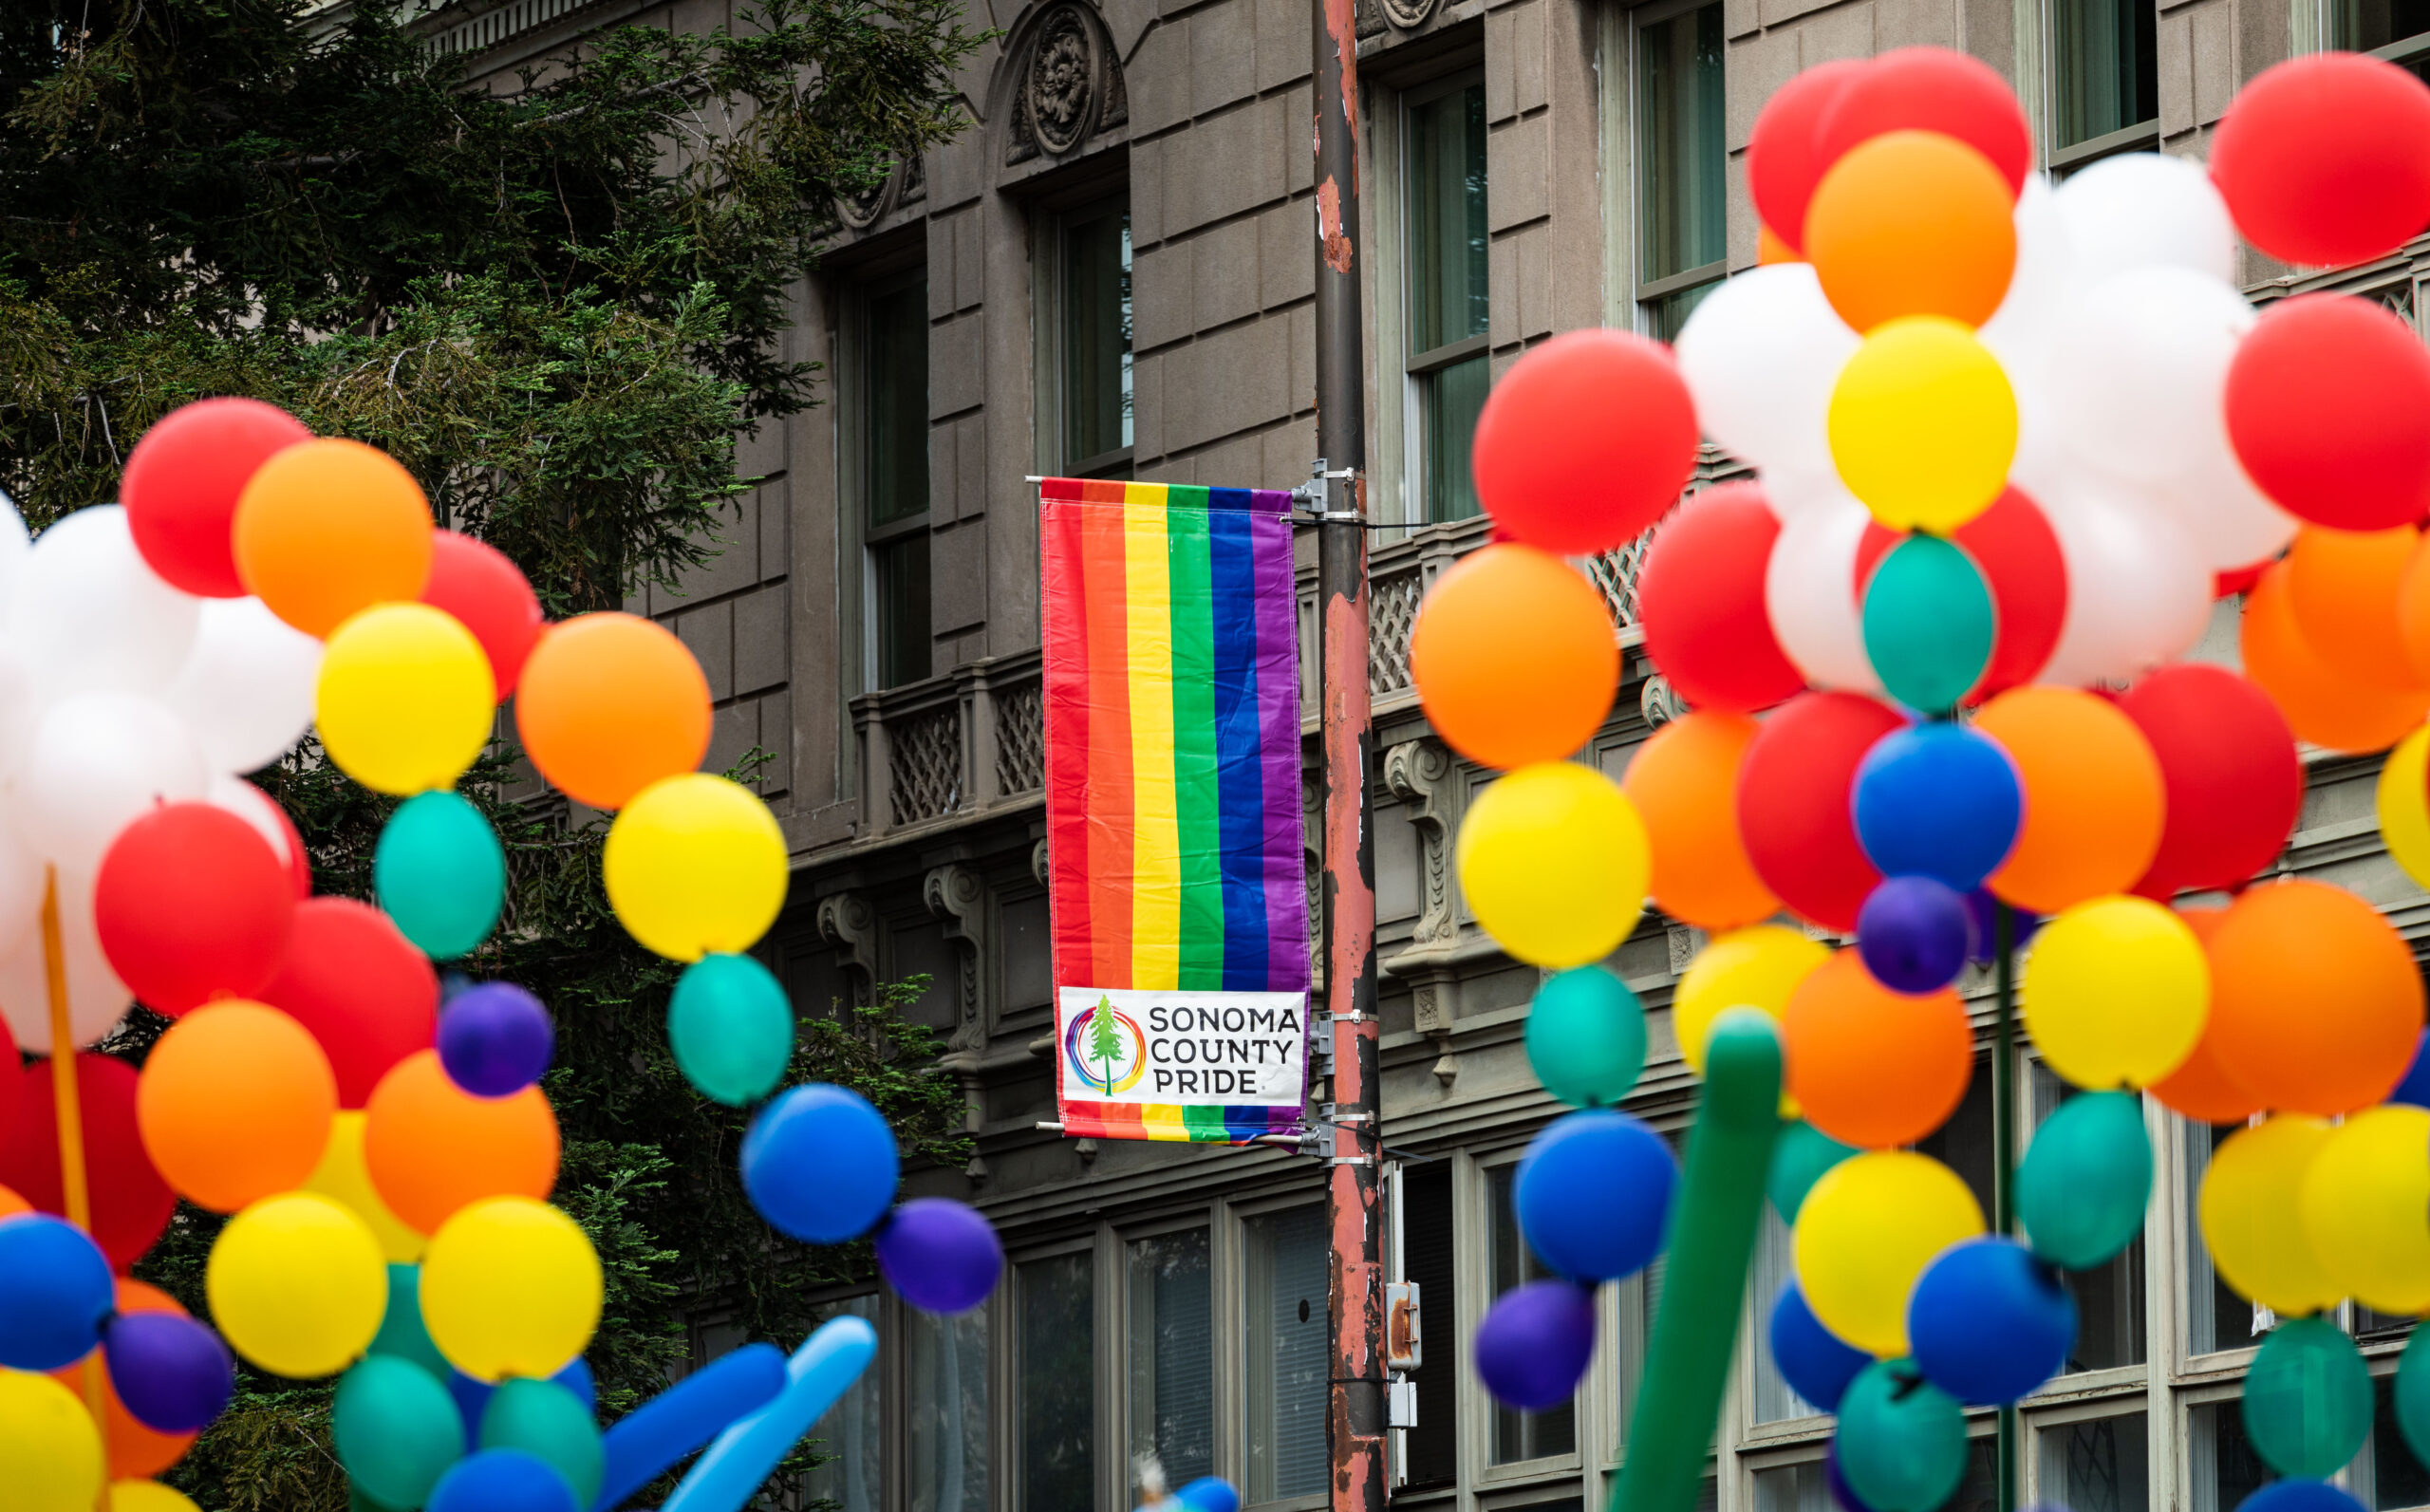 Sonoma County Pride, rainbow flag, balloons